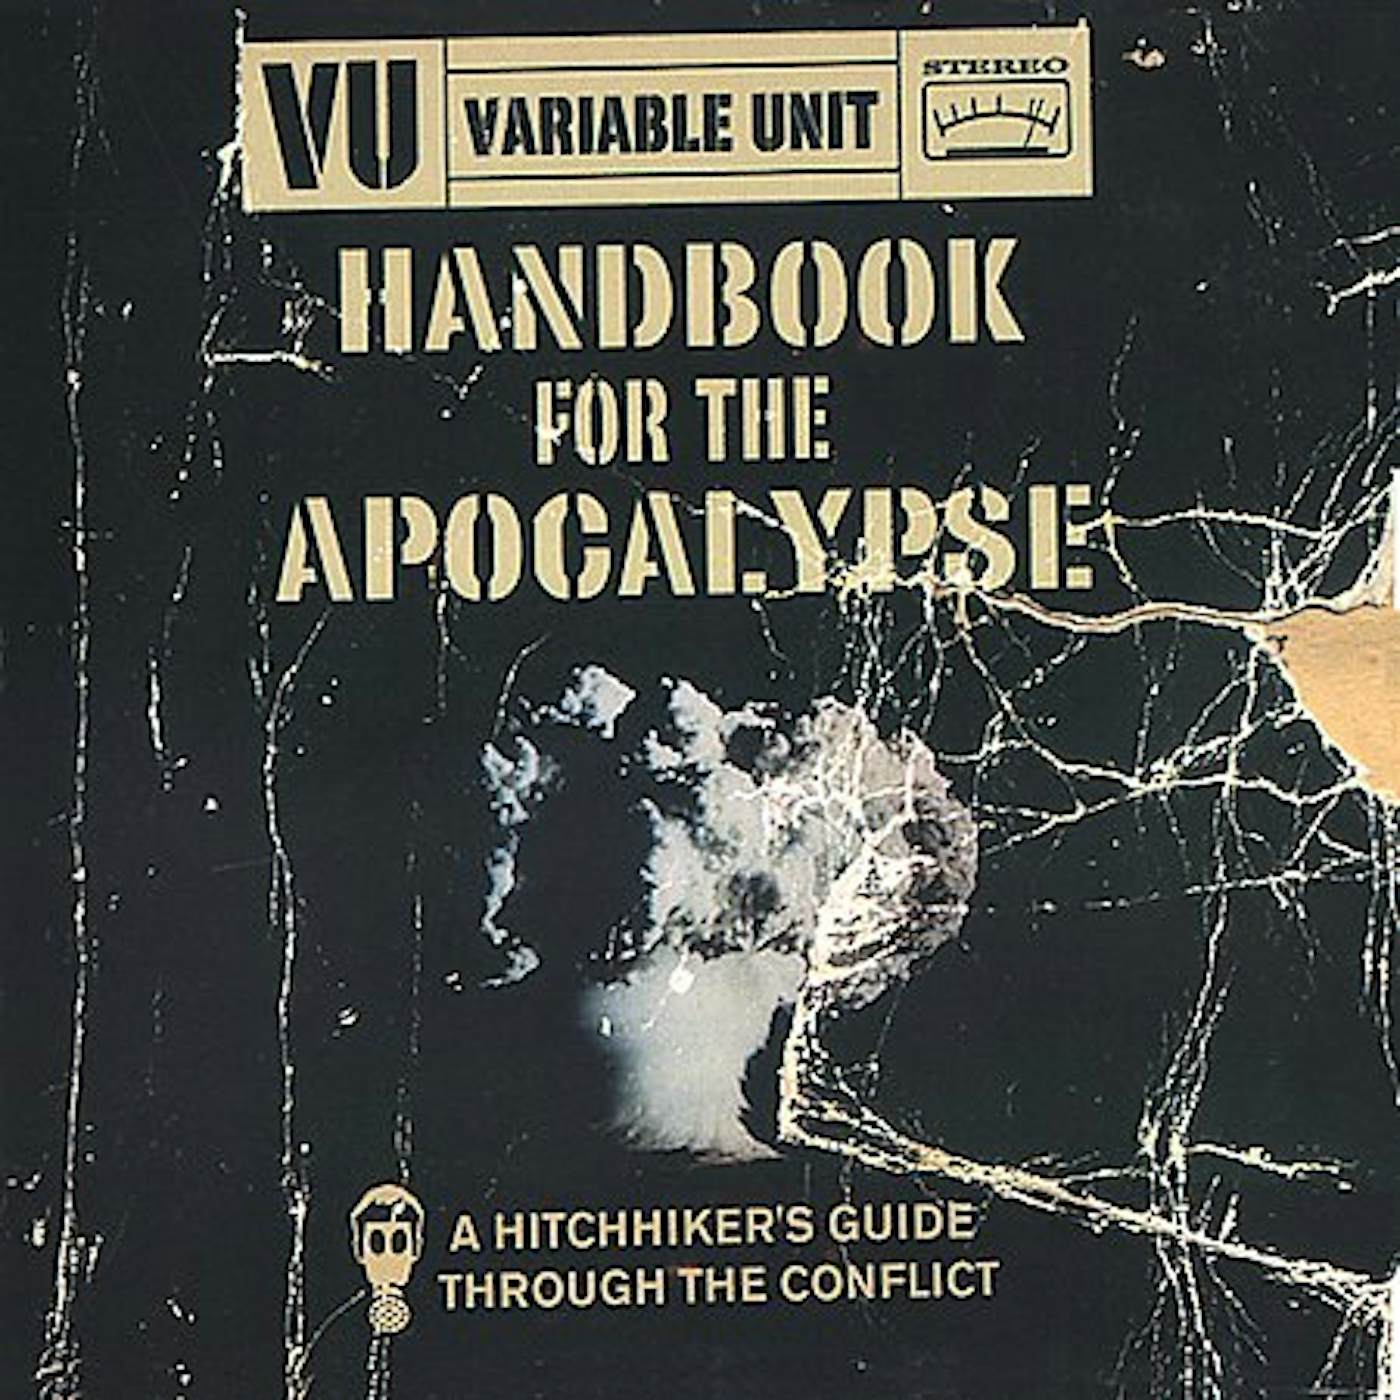 Variable Unit Handbook for the Apocalypse Vinyl Record